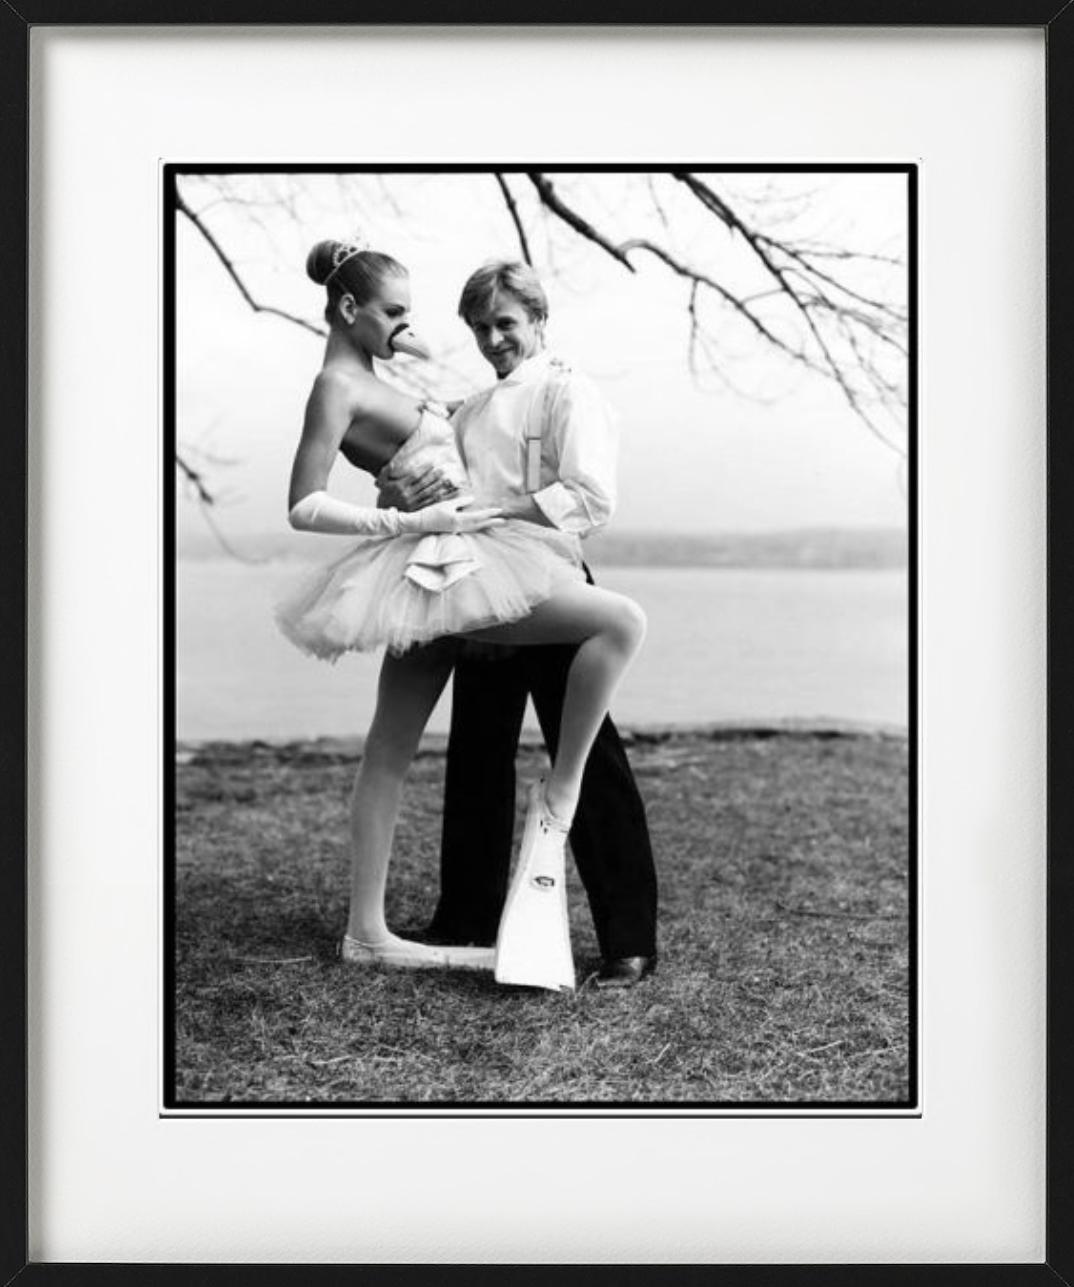 'Swan Prince' - Baryshnikov with Uma Thurman in Tutu, fine art photography, 1987 - Photograph by Arthur Elgort